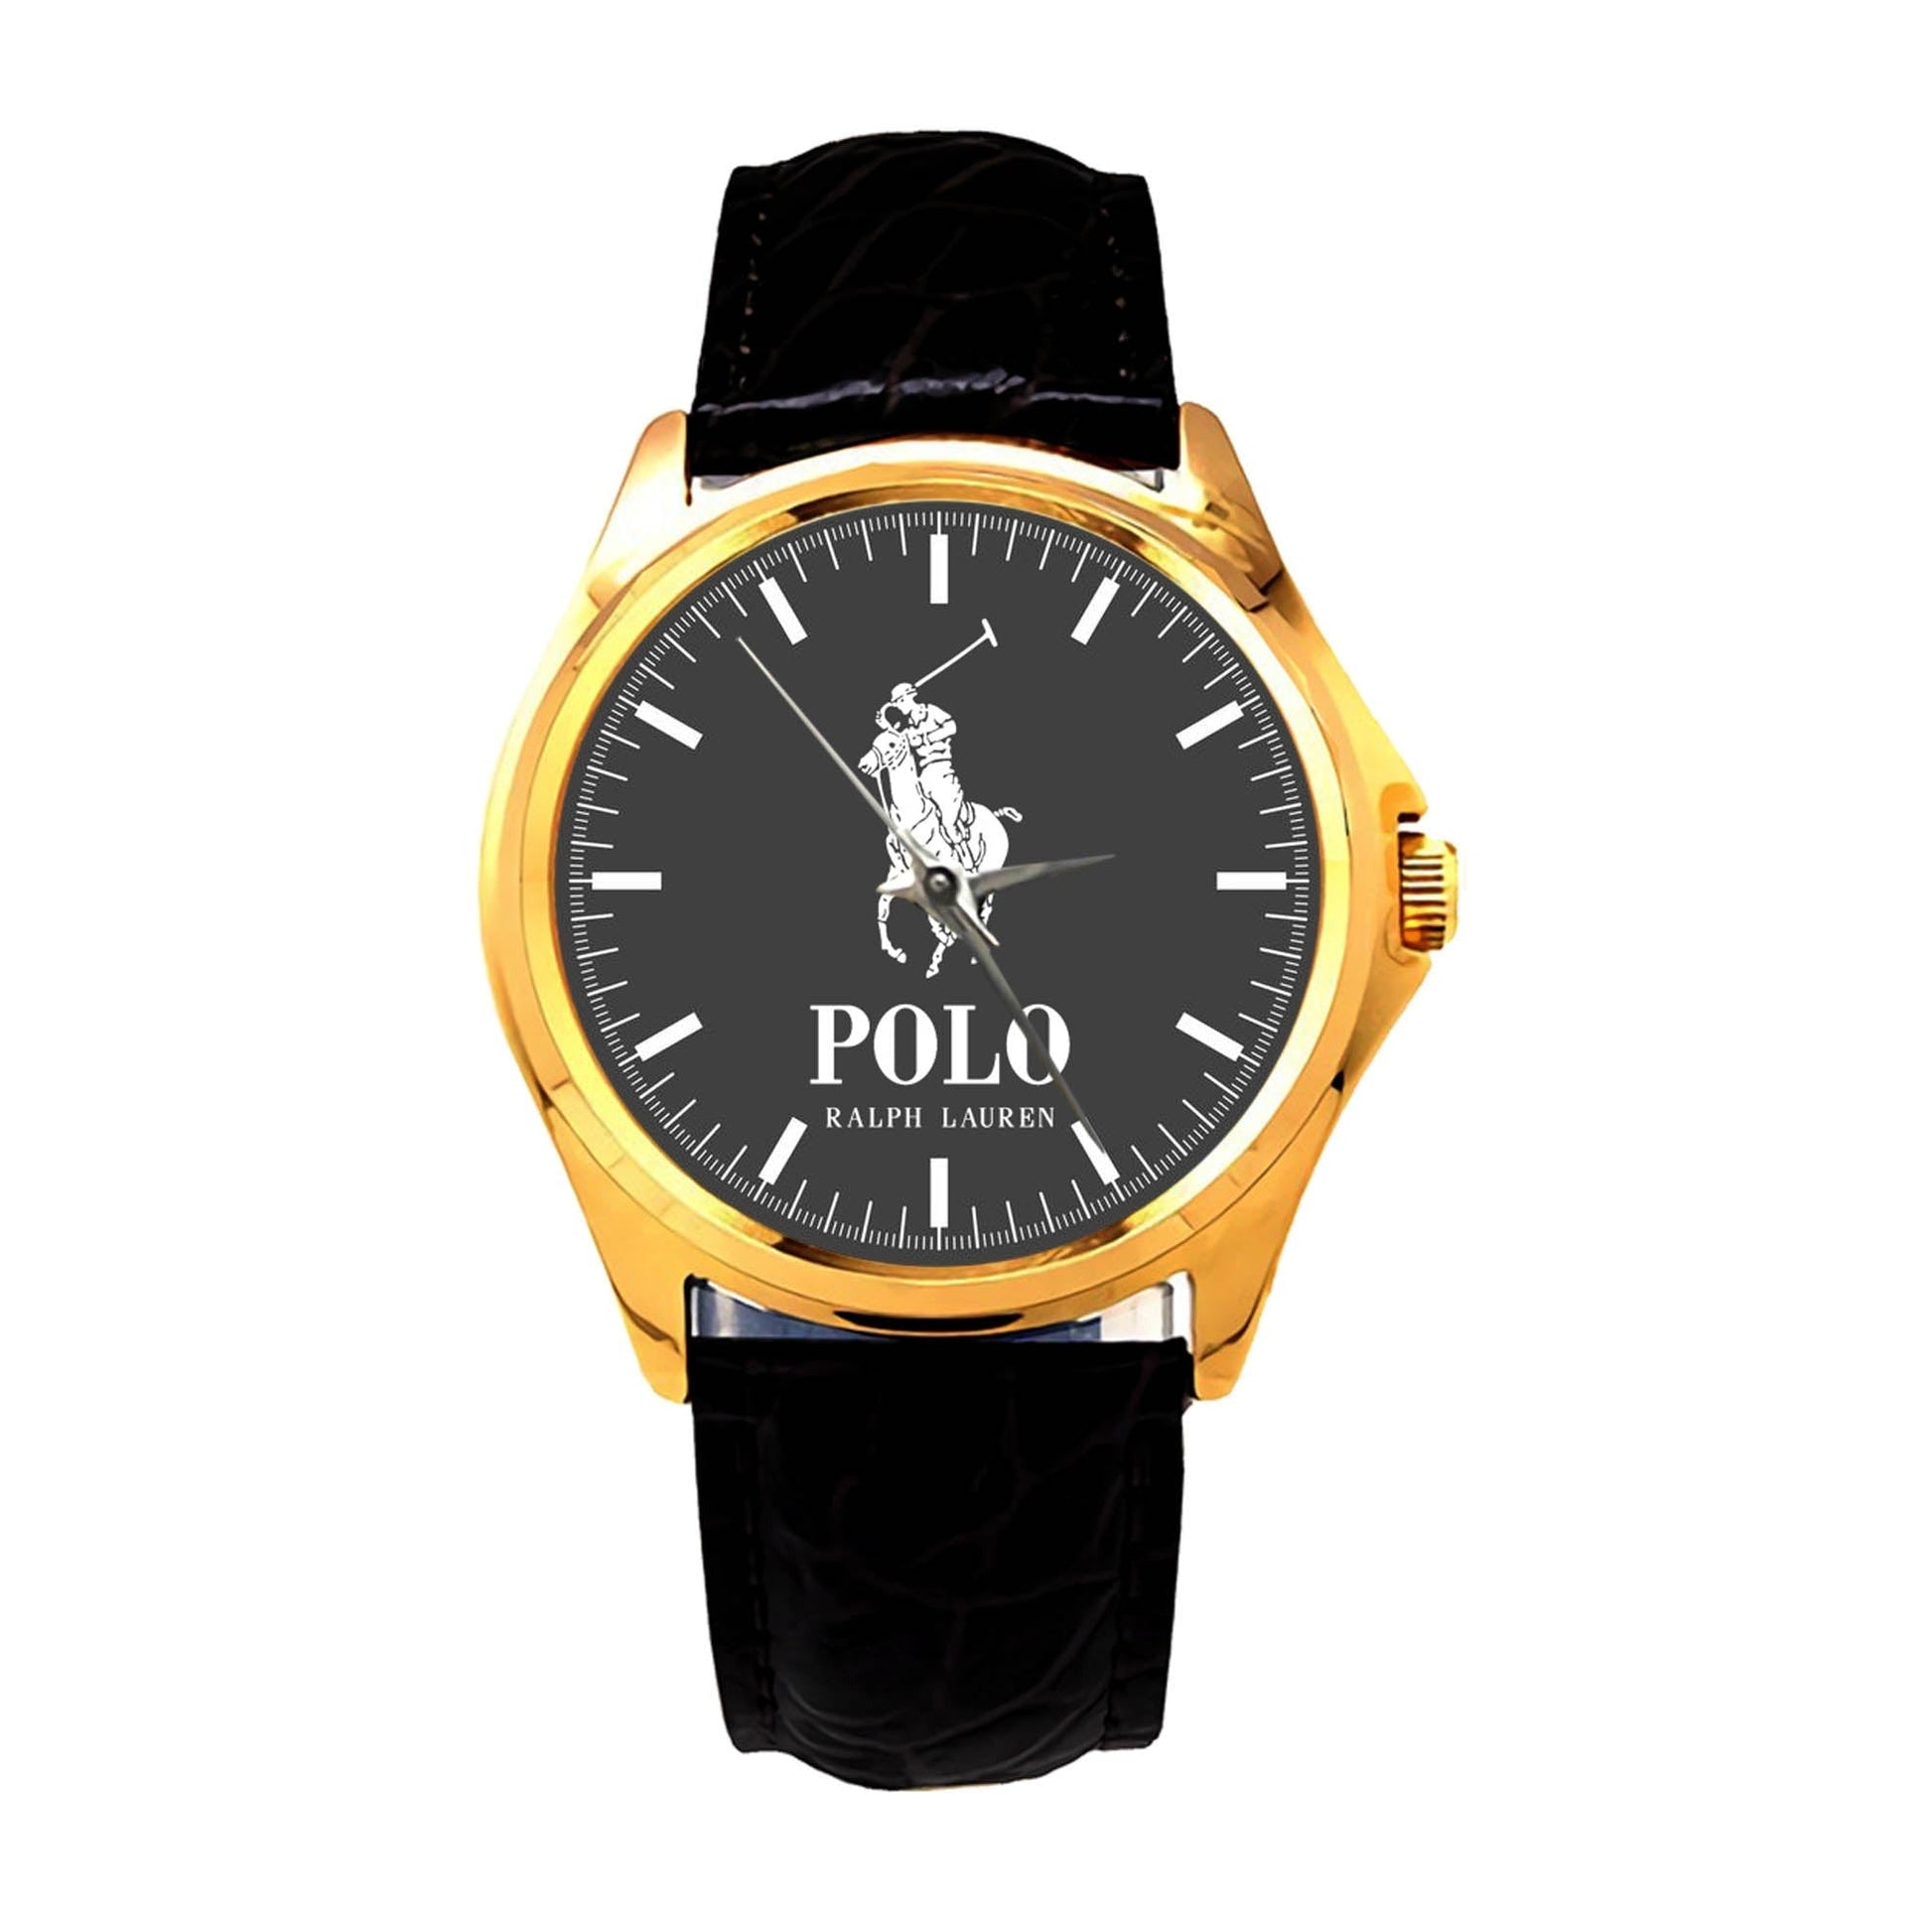 Polo Ralph Lauren Watches KP650